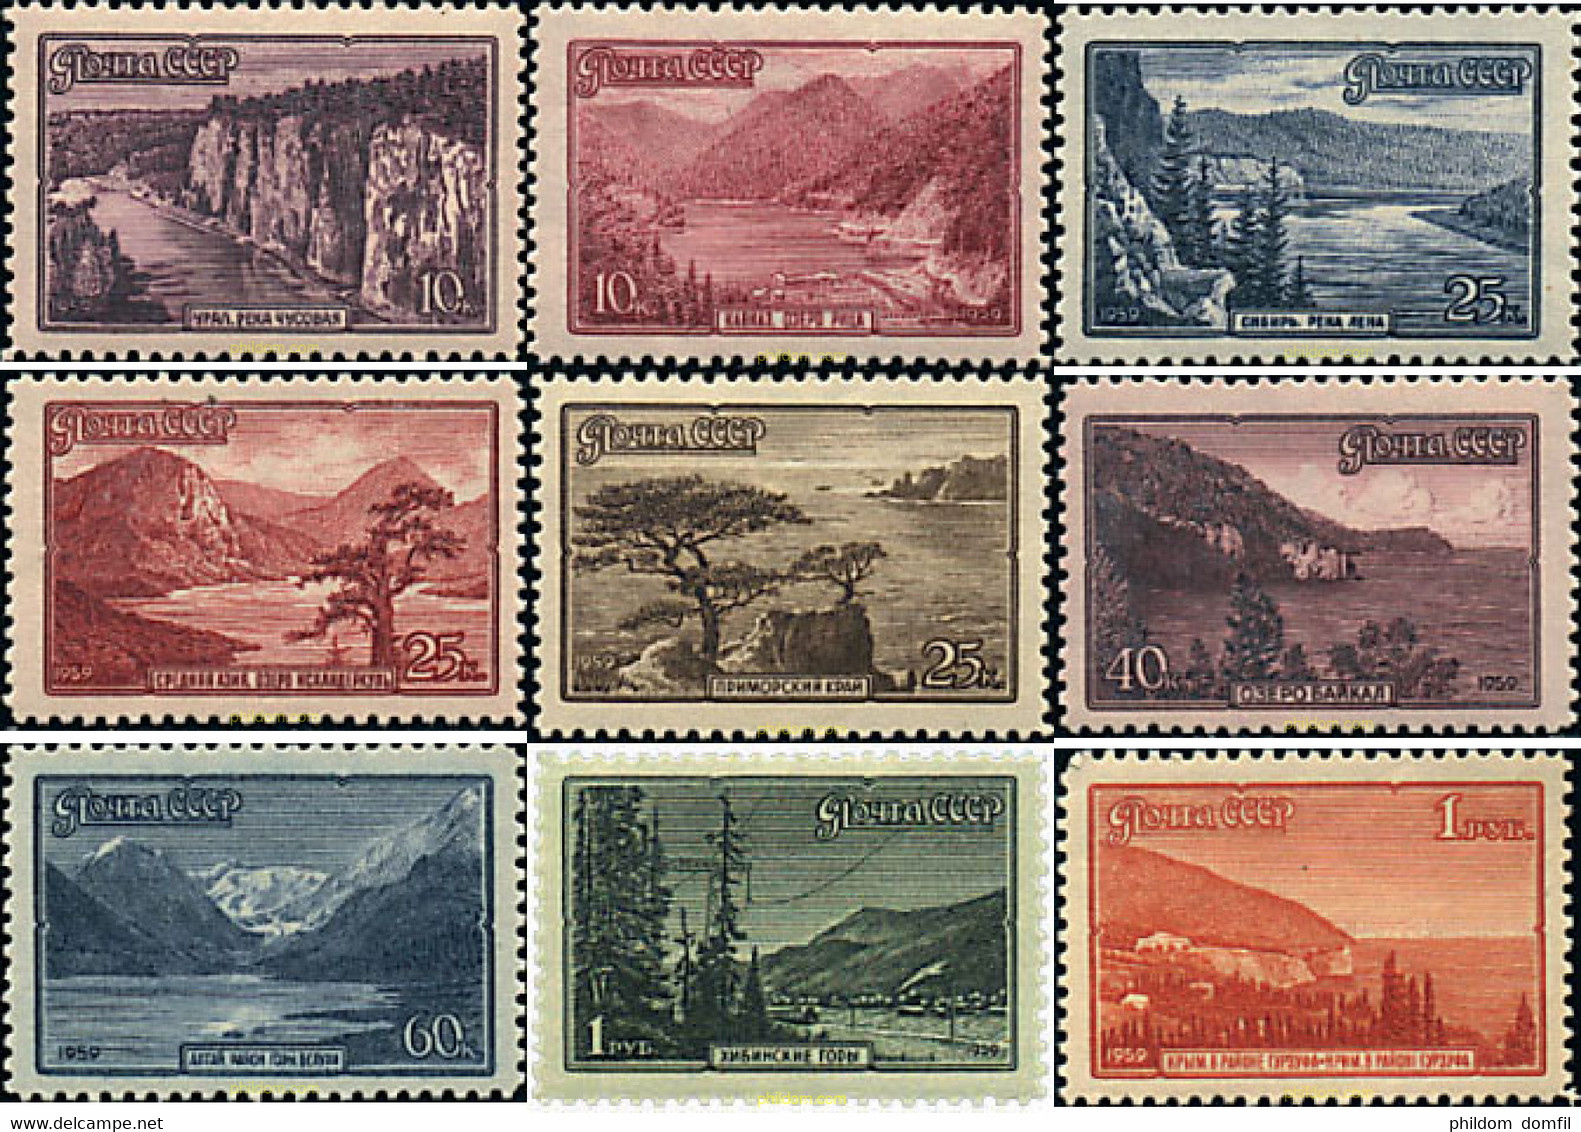 695704 MNH UNION SOVIETICA 1959 PAISAJES - Collections